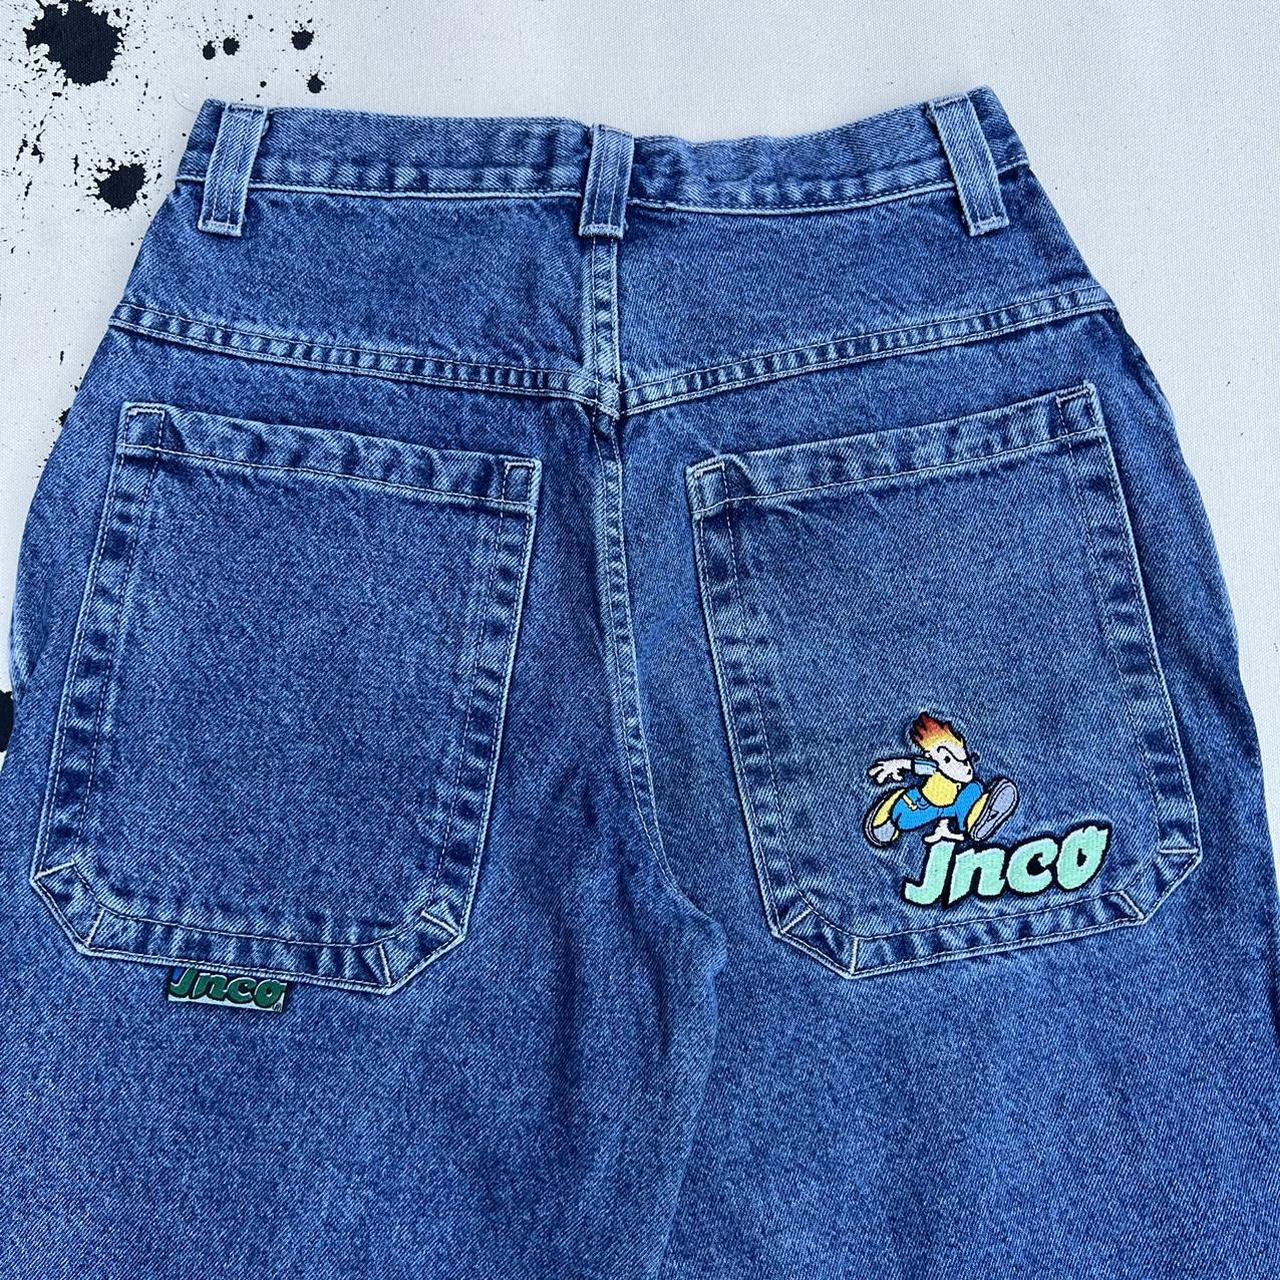 Vintage 90s JNCO Flamehead Embroidered Skate Baggy... - Depop